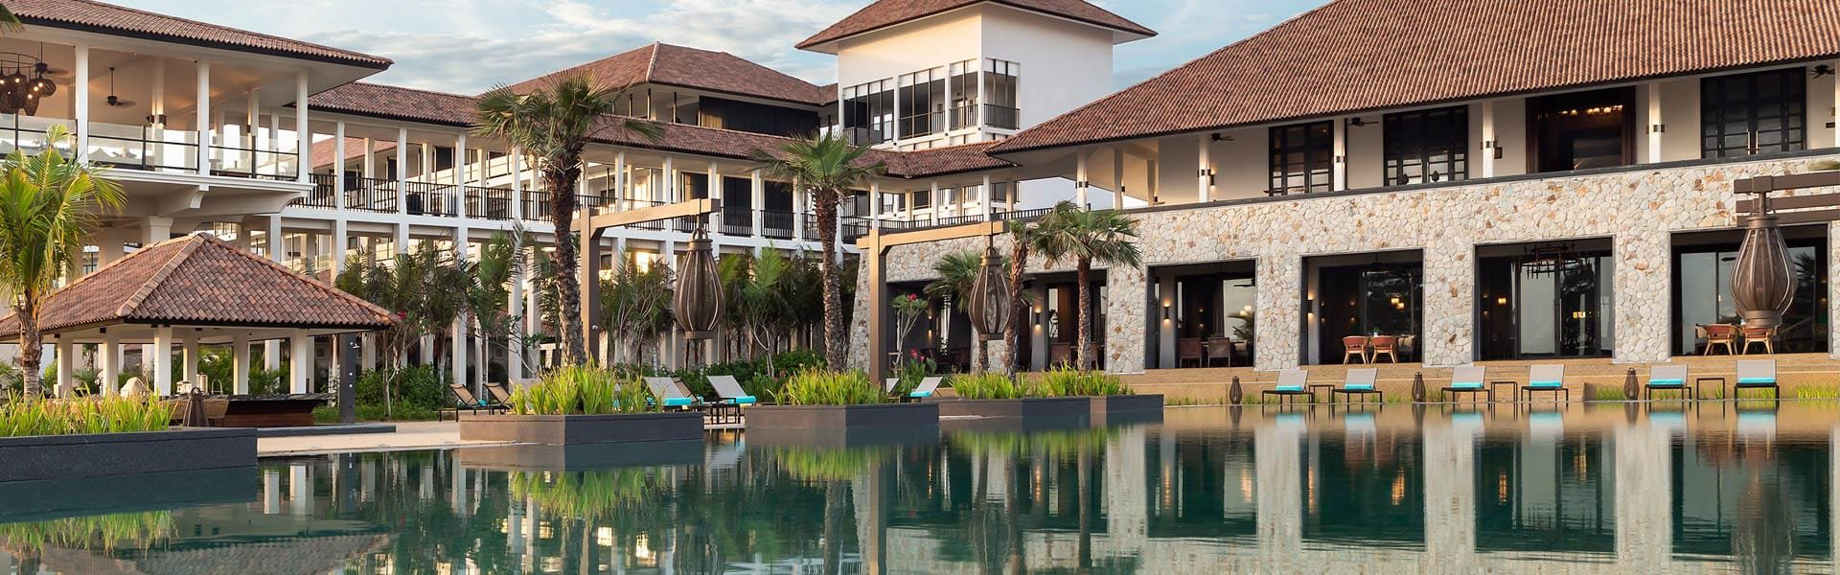 Anantara Desaru Coast Resort & Villas – Johor, Malaysia – Lobby Lounge Exterior View